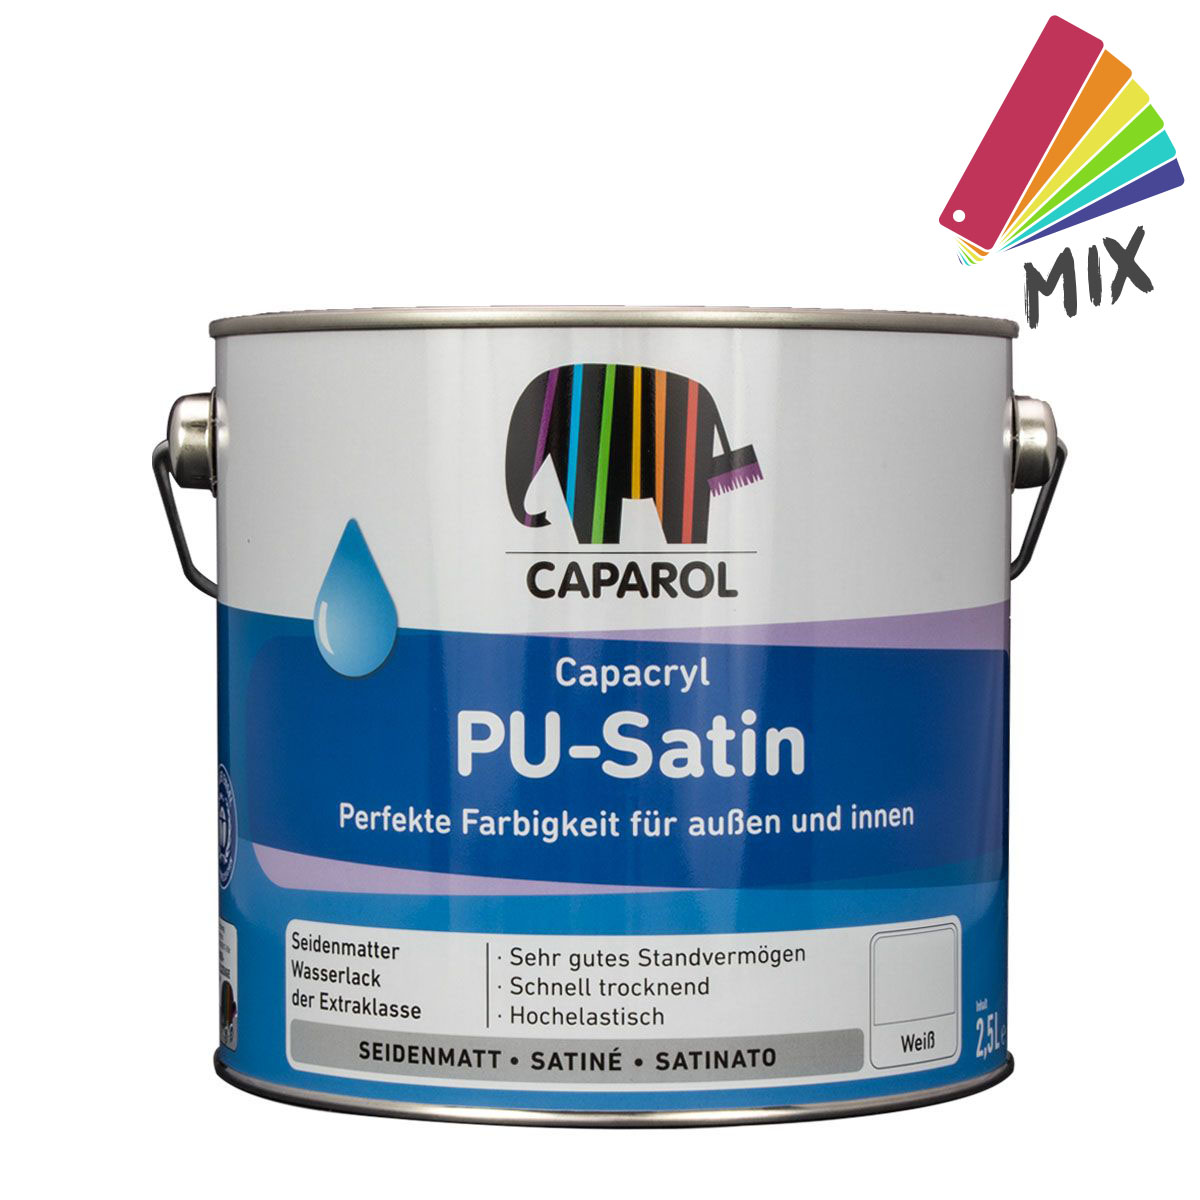 Caparol Capacryl PU-Satin 2,5L MIX PG A, seidenmatt